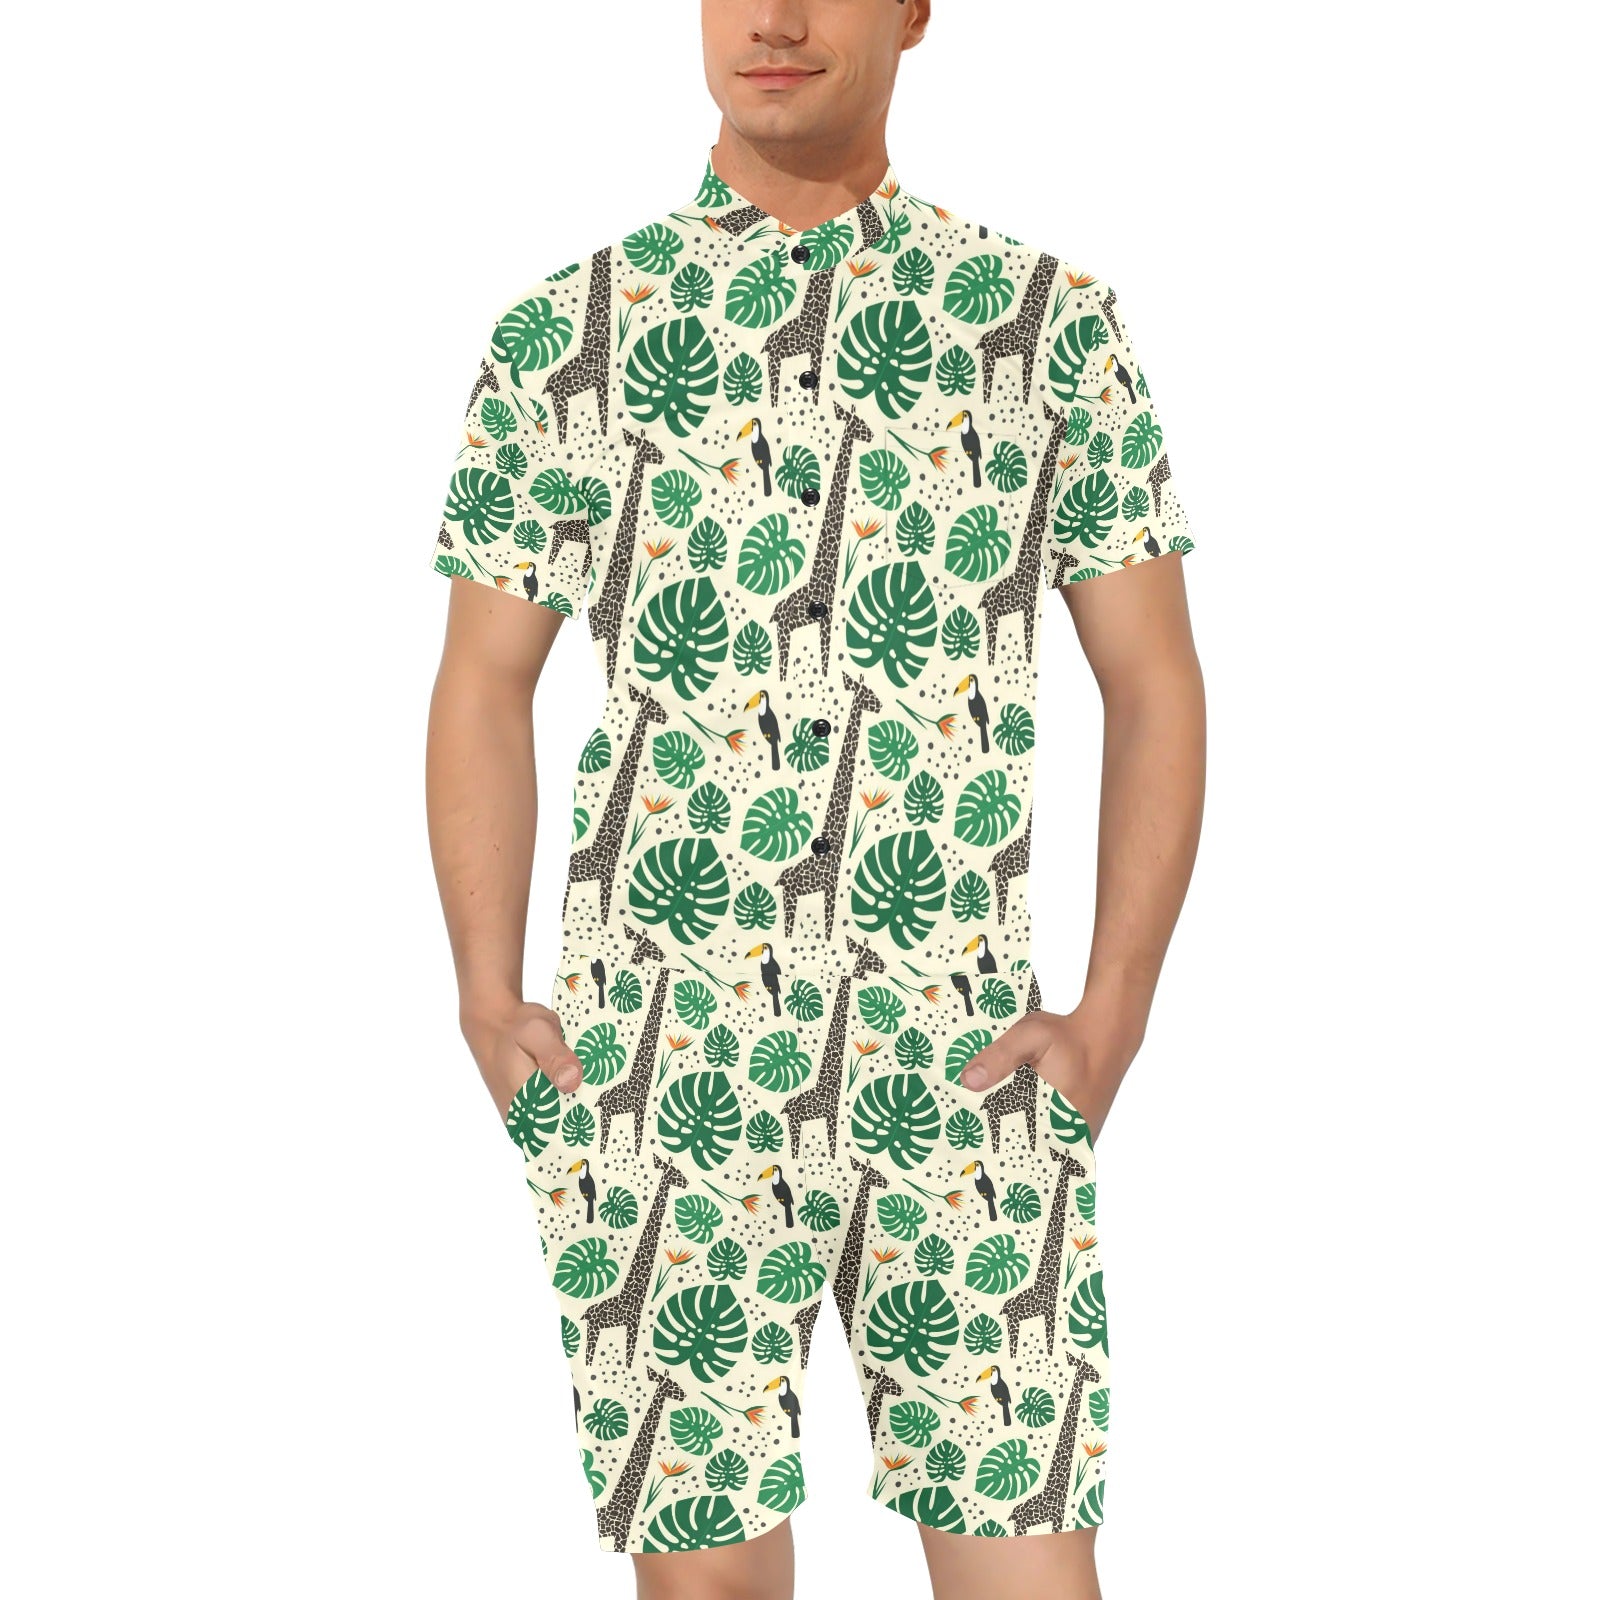 Rainforest Giraffe Pattern Print Design A02 Men's Romper